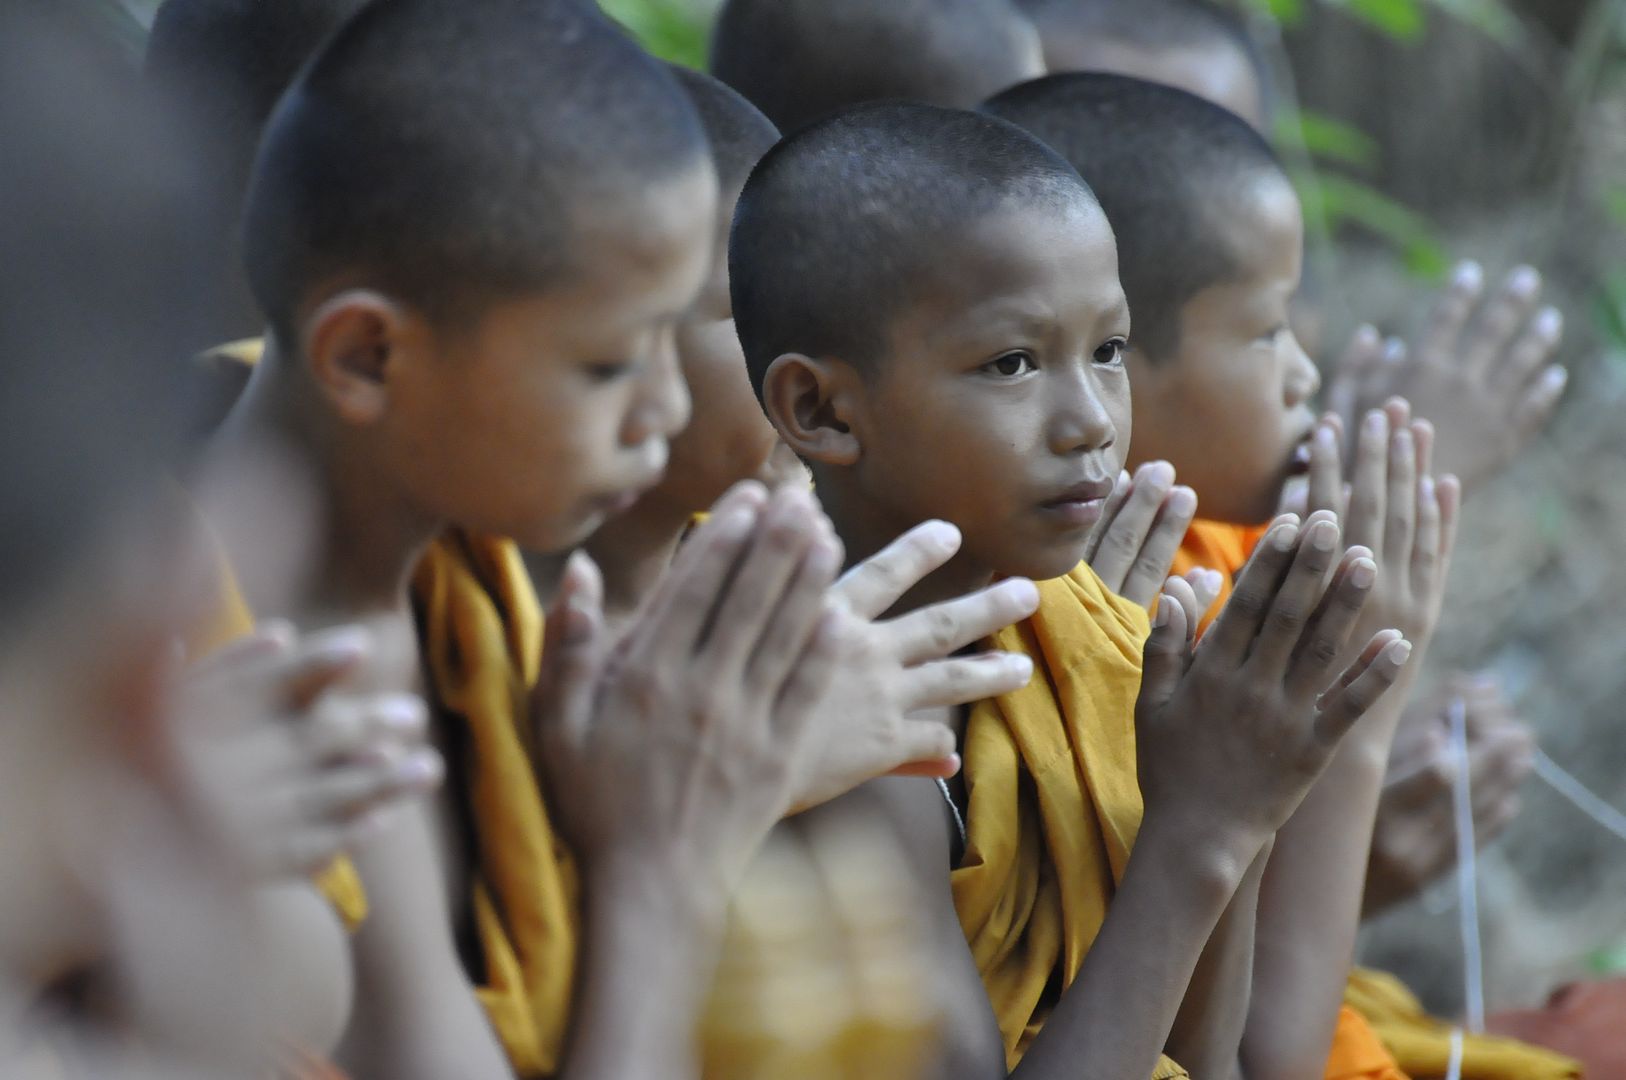 Depth_of_field-Buddhism-Child-Demographics_of_Asia-Myth_and_ritual-Prayer_zpsbe80c2e0.jpg